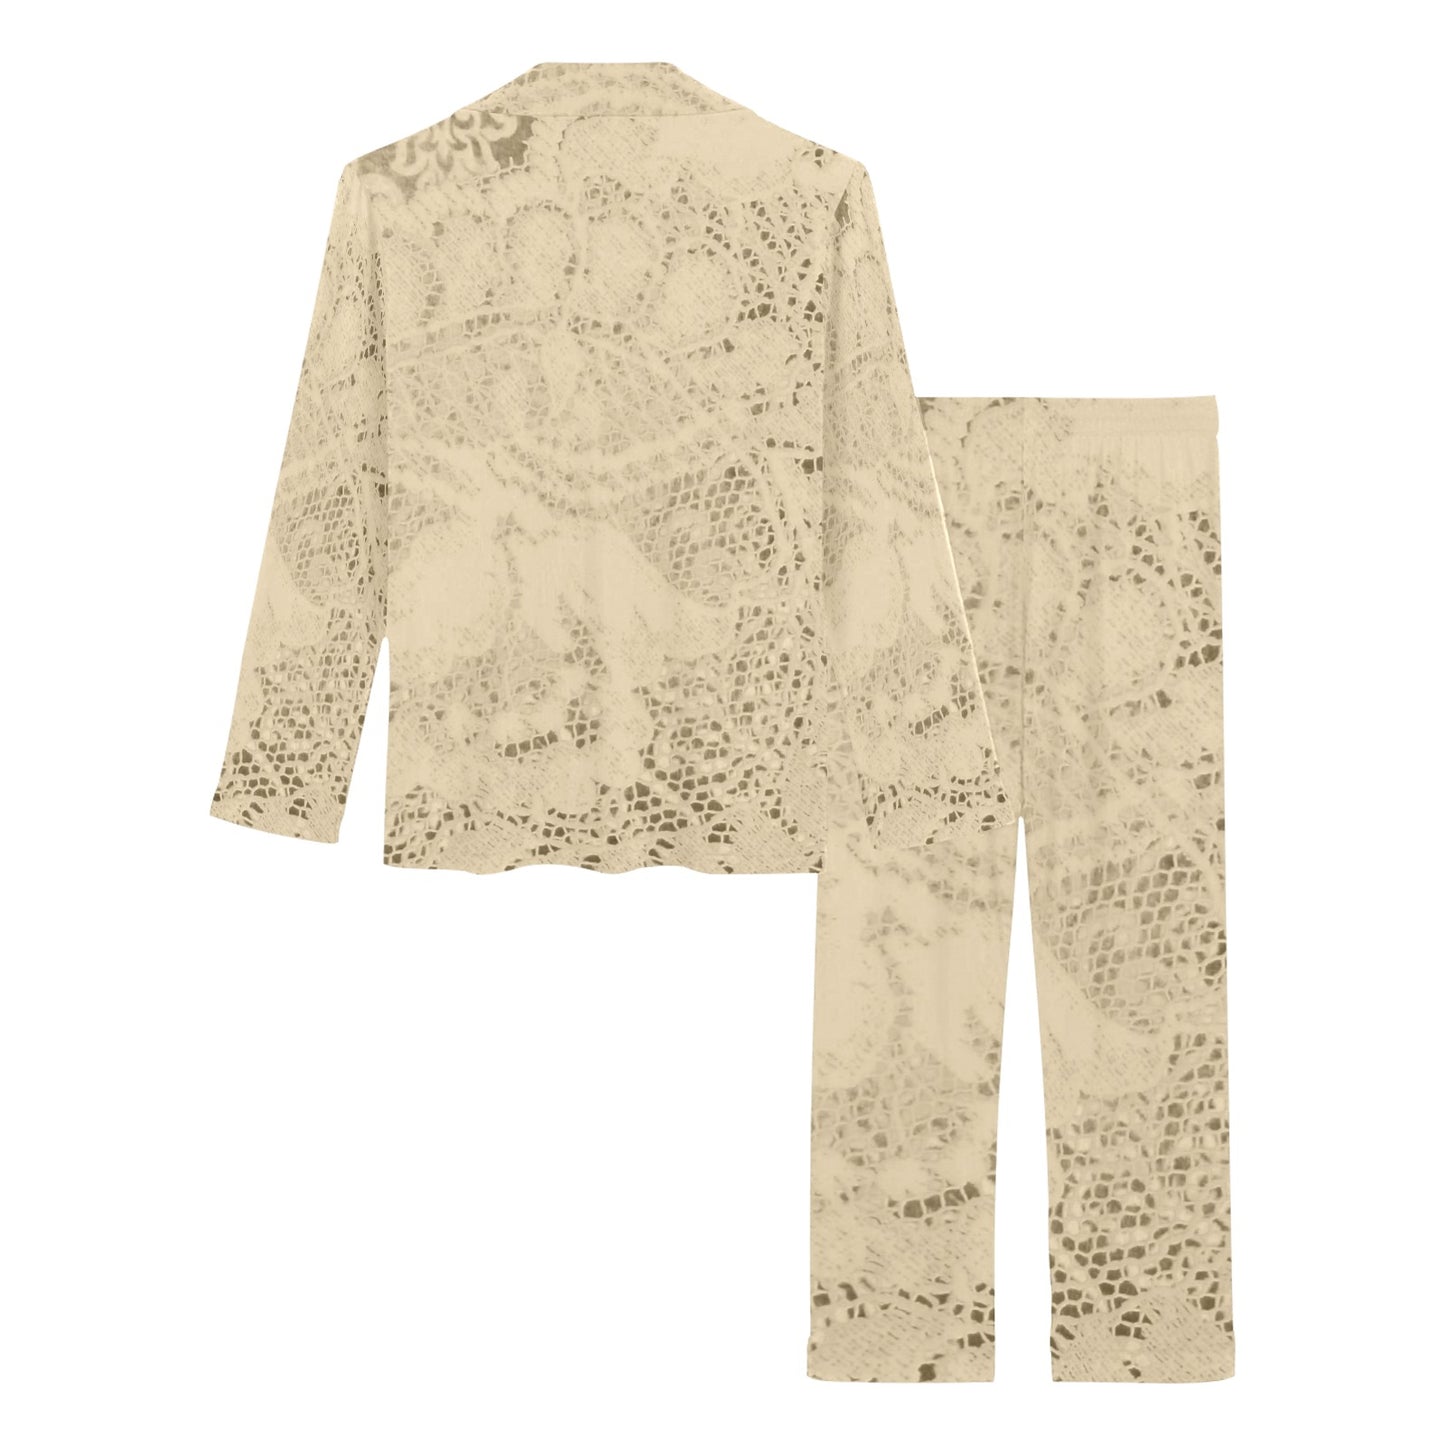 Victorian printed lace pajama set, design 26 Women's Long Pajama Set (Sets 02)